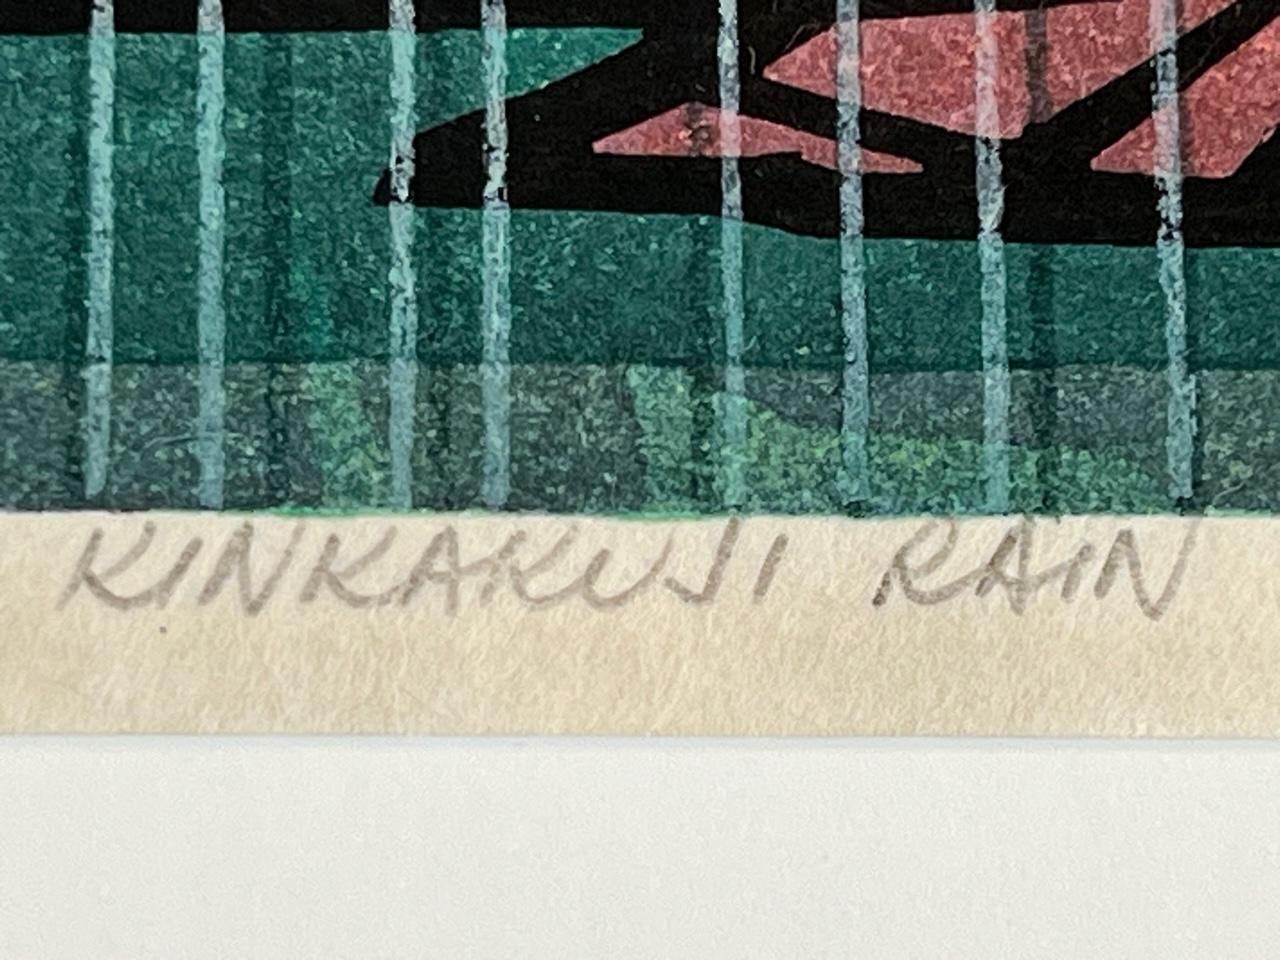 Kinkakuji Rain, woodblock print by Clifton Karhu, framed, green, orange, black For Sale 5